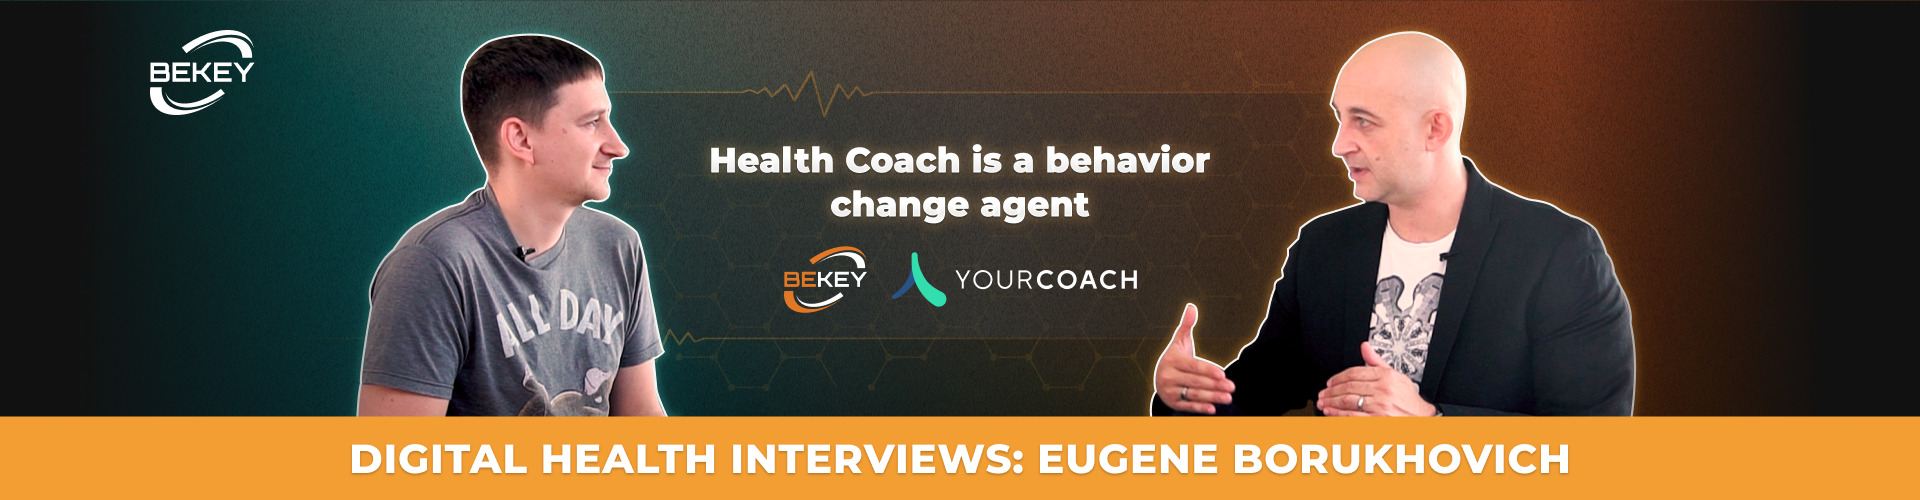 YourCoach Is a Behavior Change Agent. Digital Health Interviews: Eugene Borukhovich - image